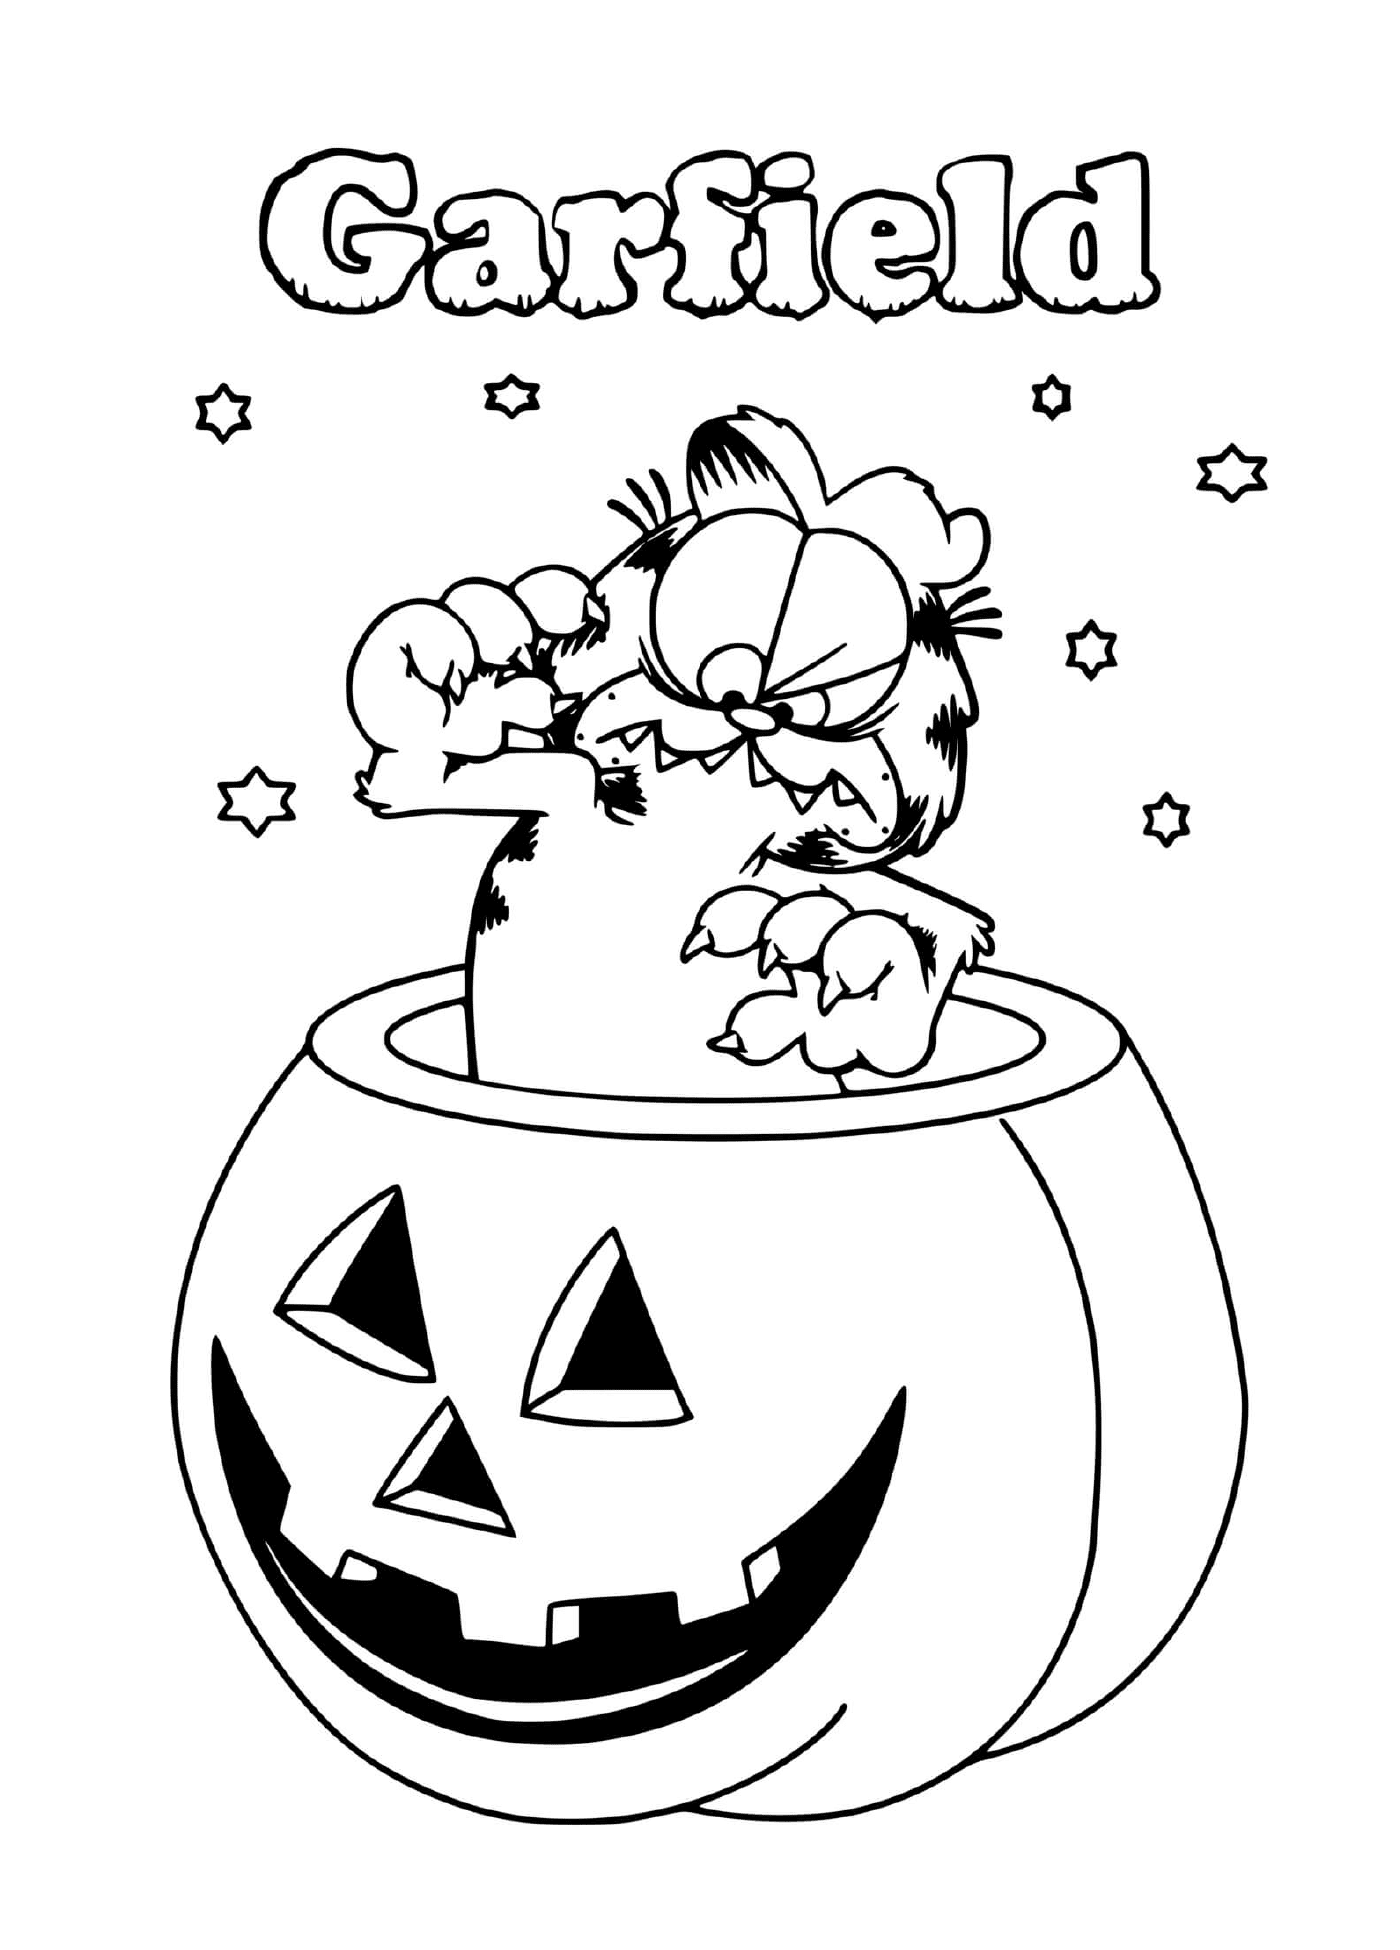   Garfield fête Halloween dans une citrouille 